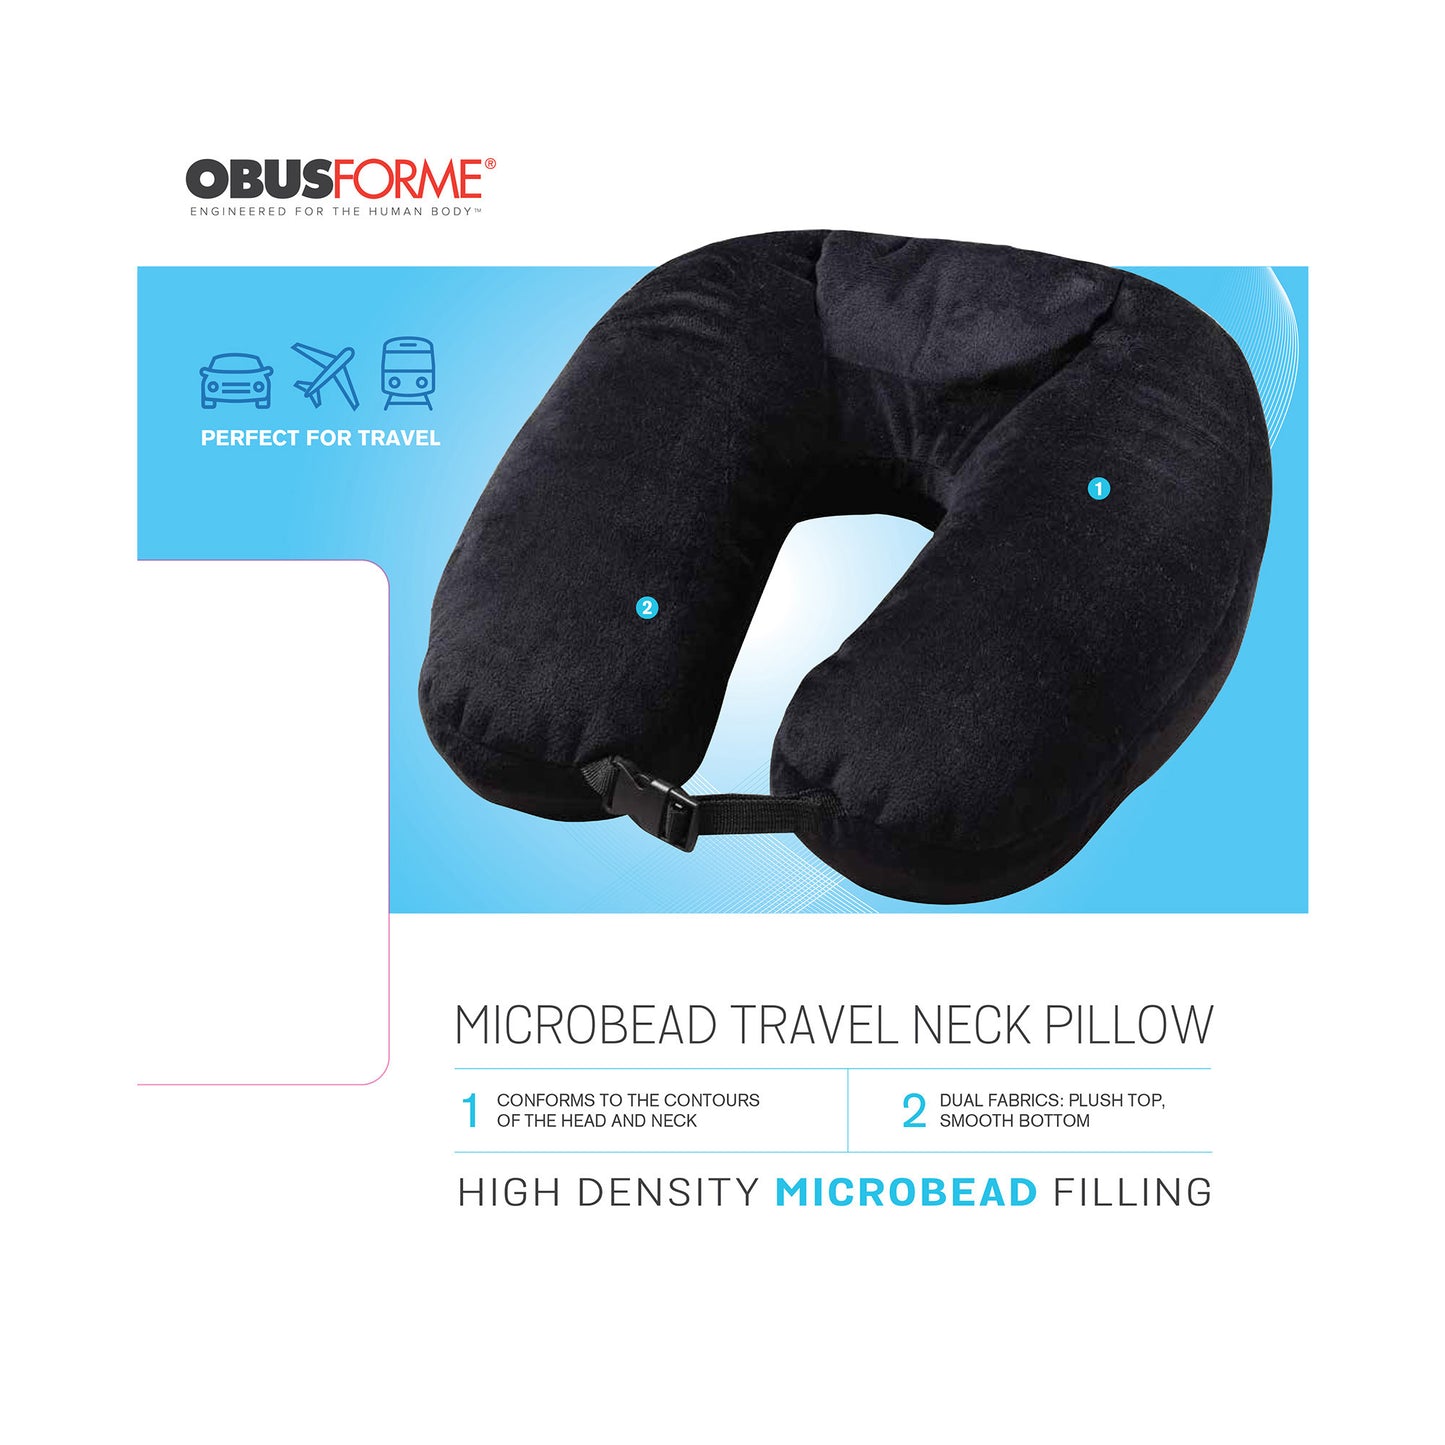 ObusForme Microbead Travel Neck Pillow - 15-07336